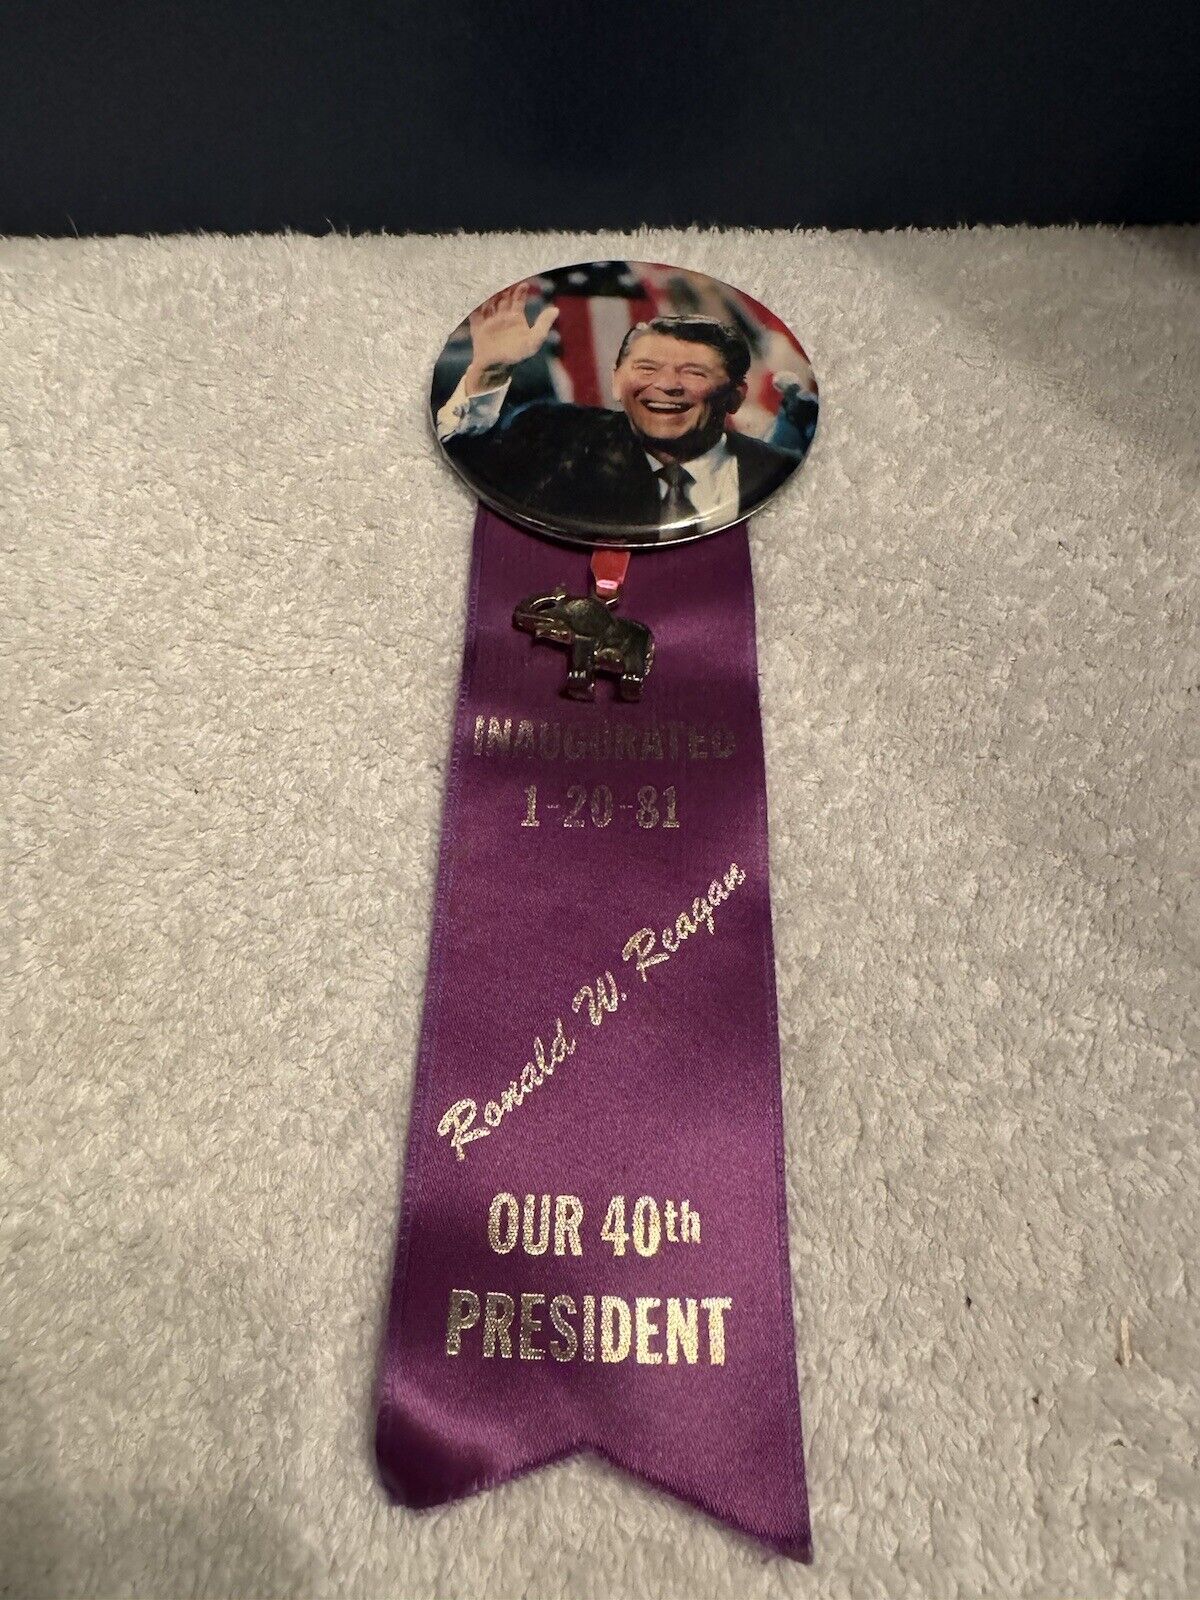  Ronald Reagan 40th President  Inauguration Pinback Button & Ribbon 1981